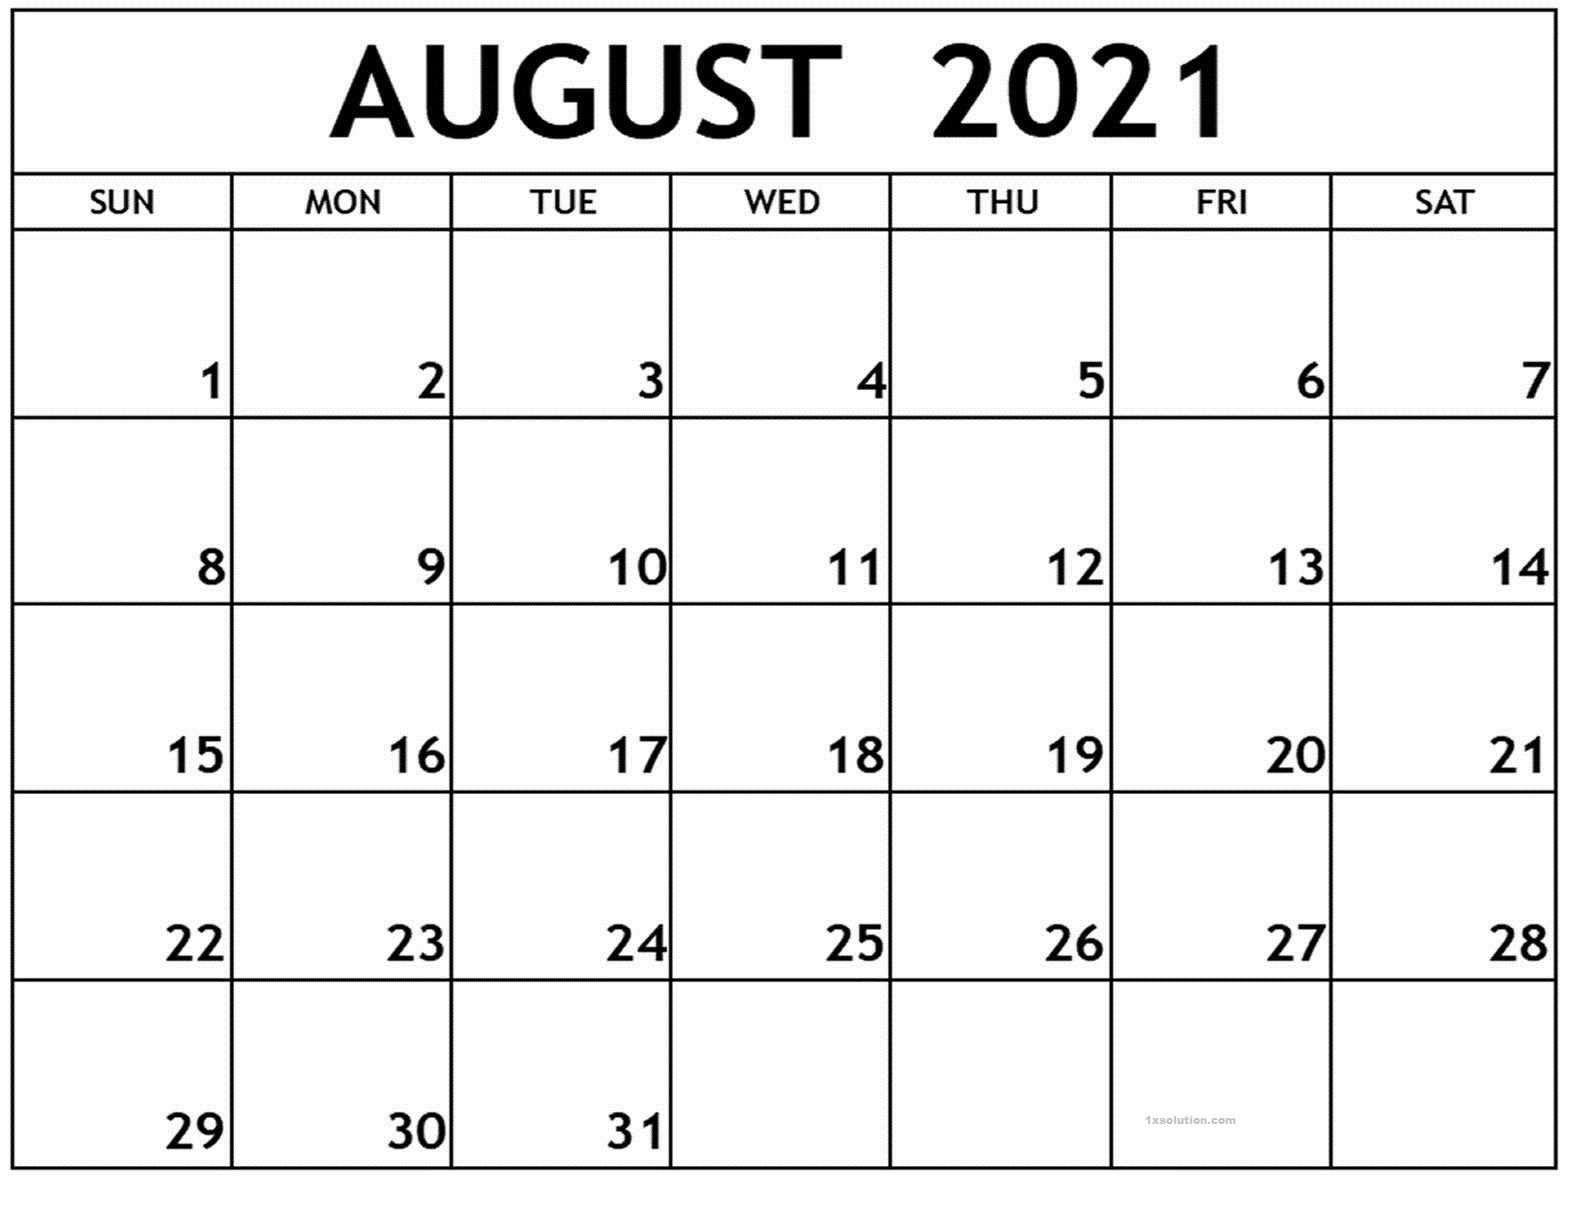 August 2021 Calendar Printable Schedule Excelsheet | Calendar Free Printable August 2021 Calendar With Holidays